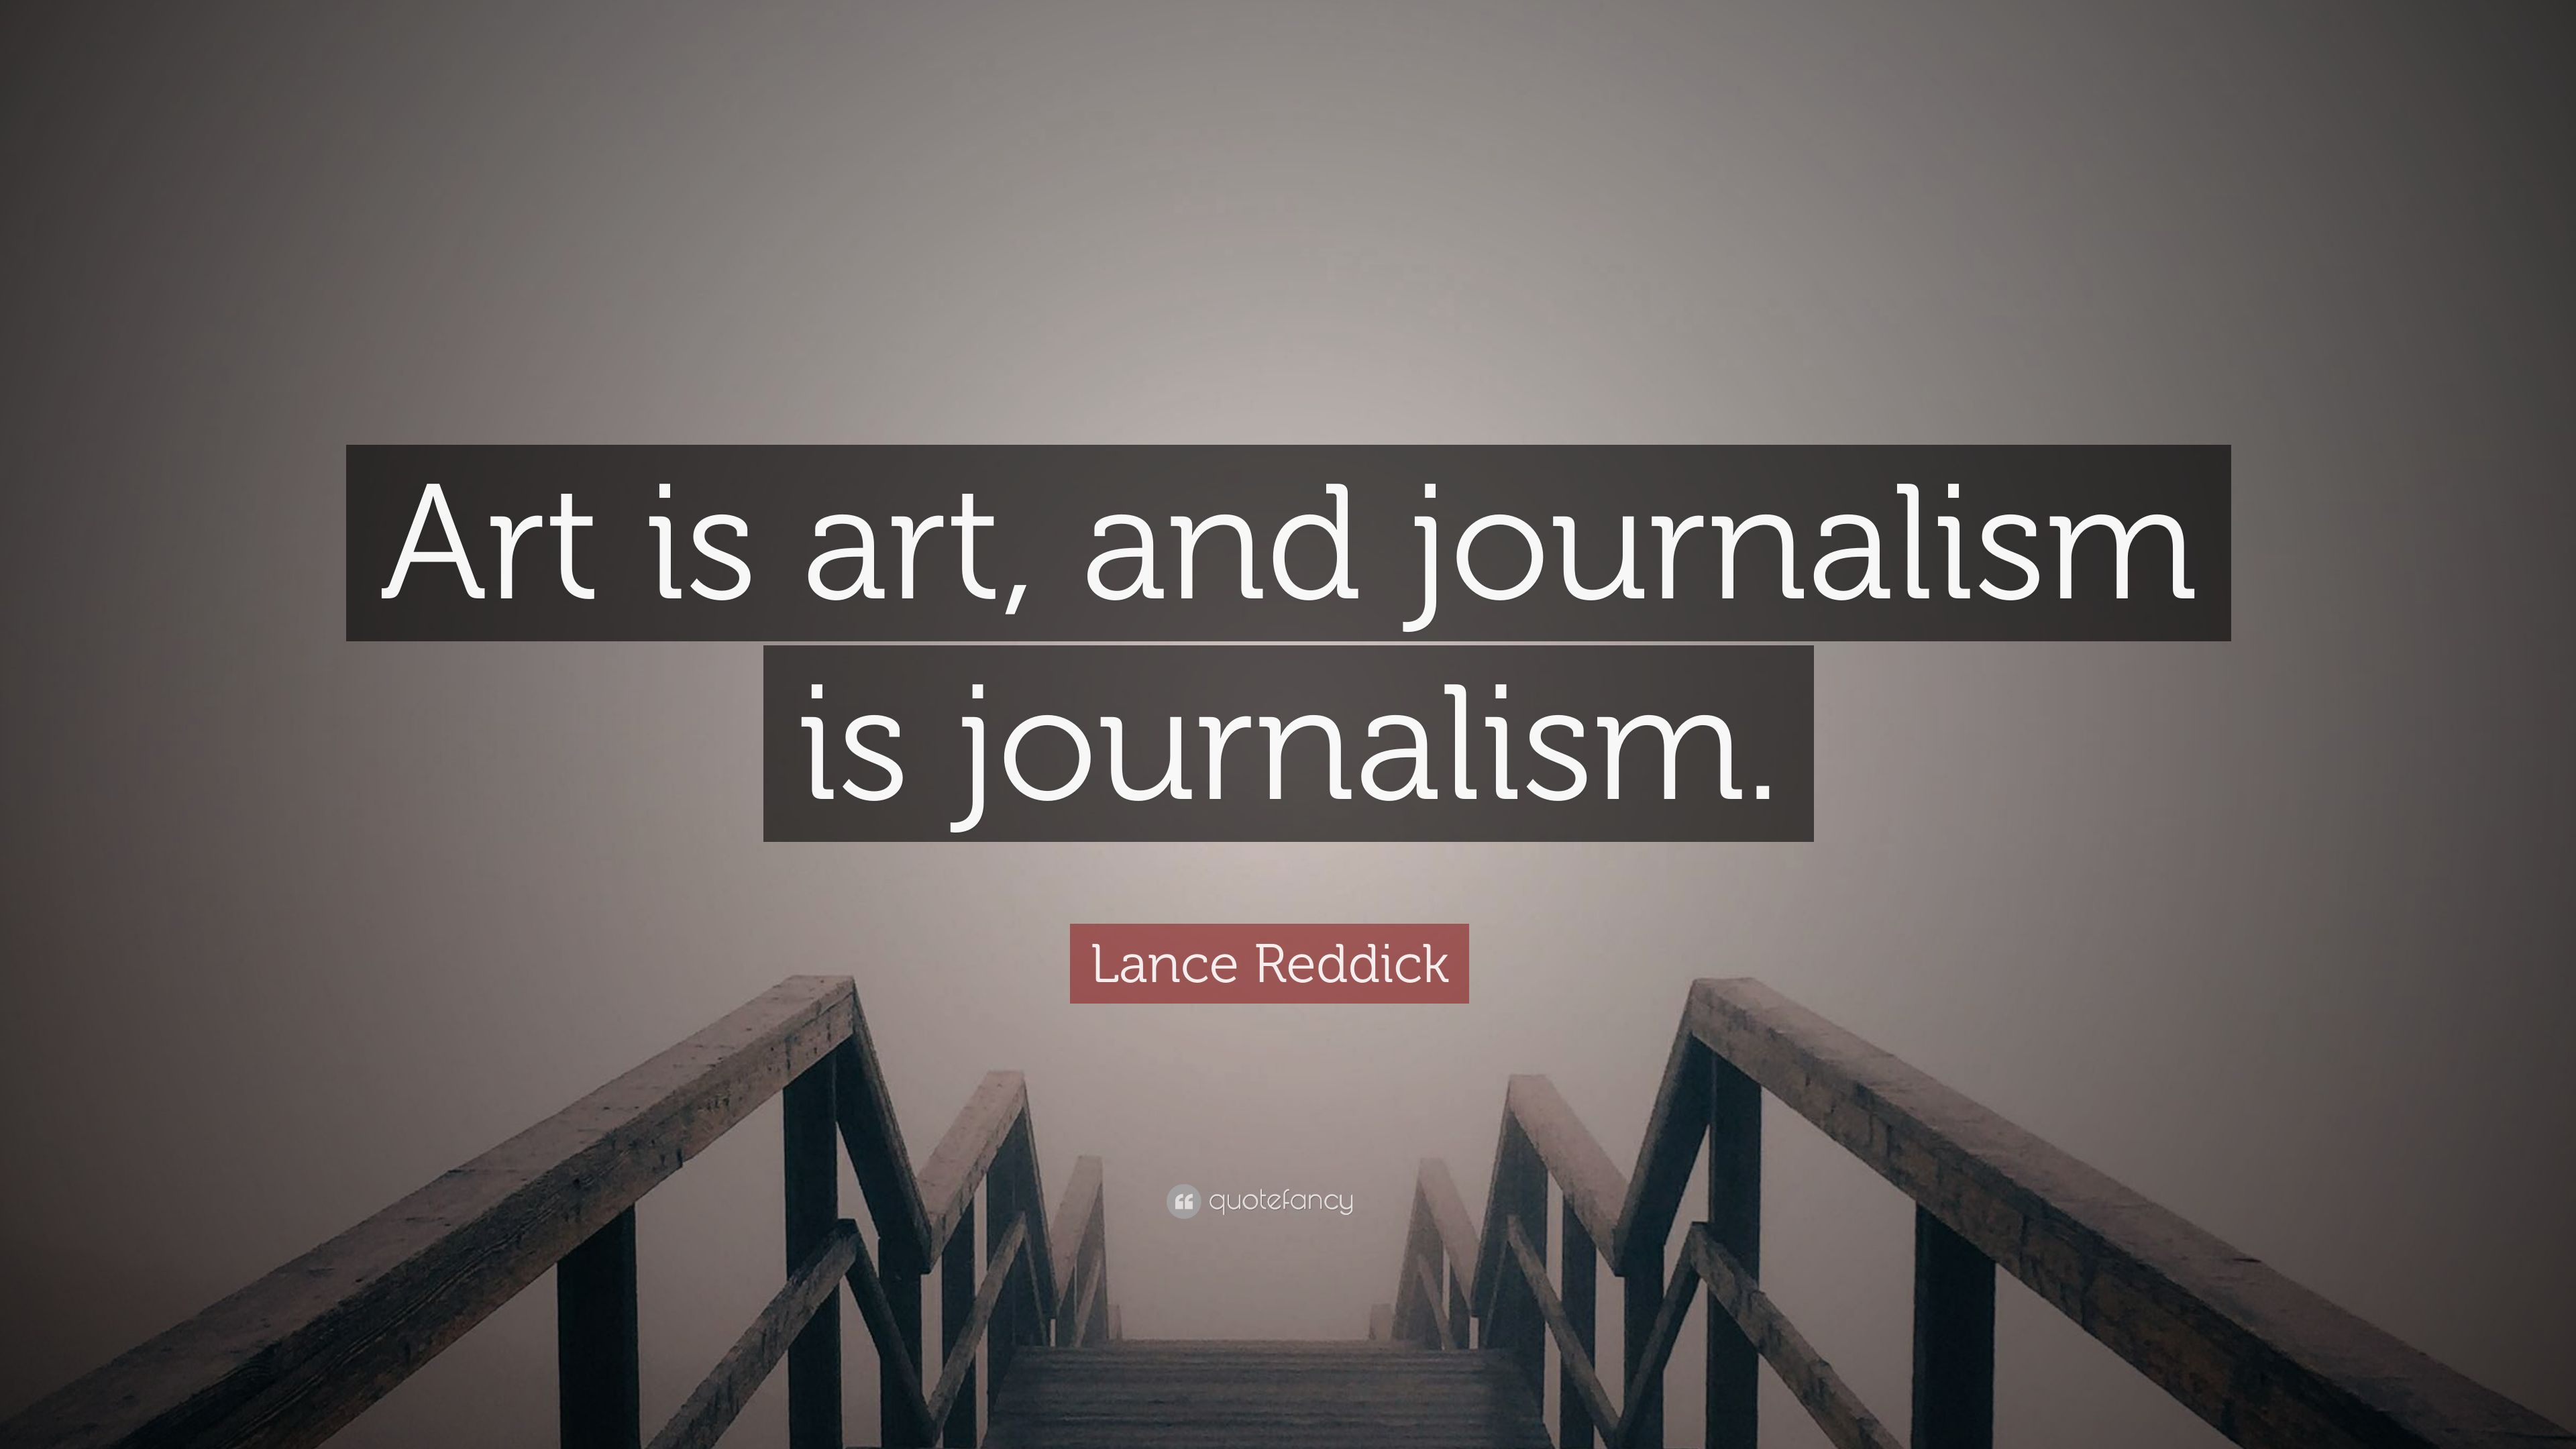 Lance Reddick Quote: “Art is art, and journalism is journalism.” (7 wallpaper)